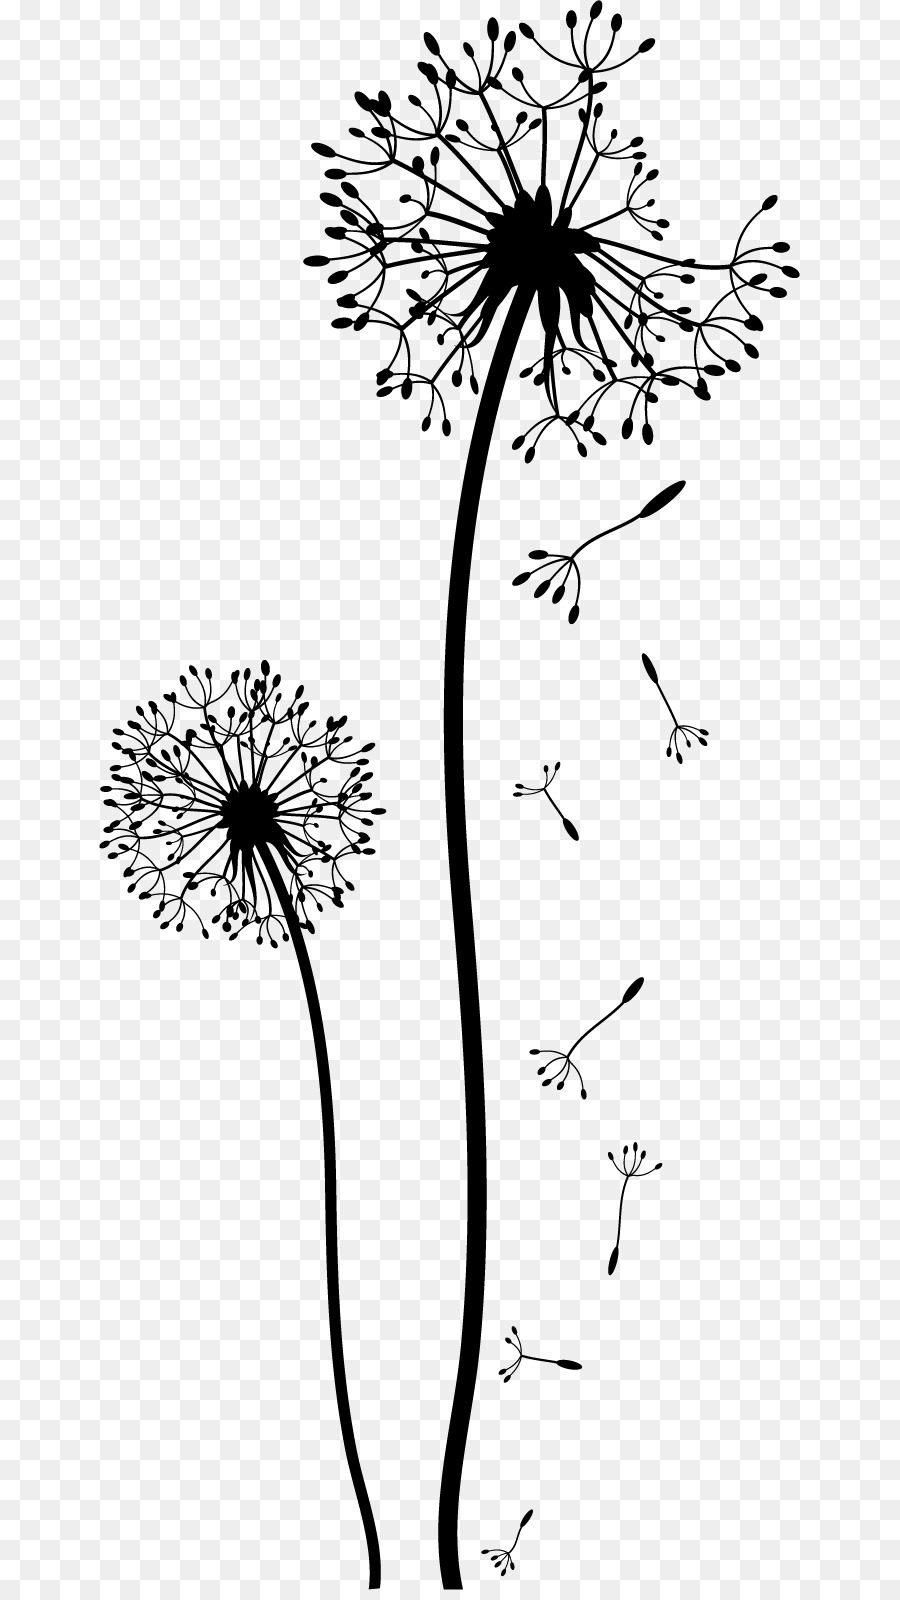 Dandelion Drawing Black and white Clip art - flower wall png download - 701*1590 - Free Transparent Dandelion png Download.